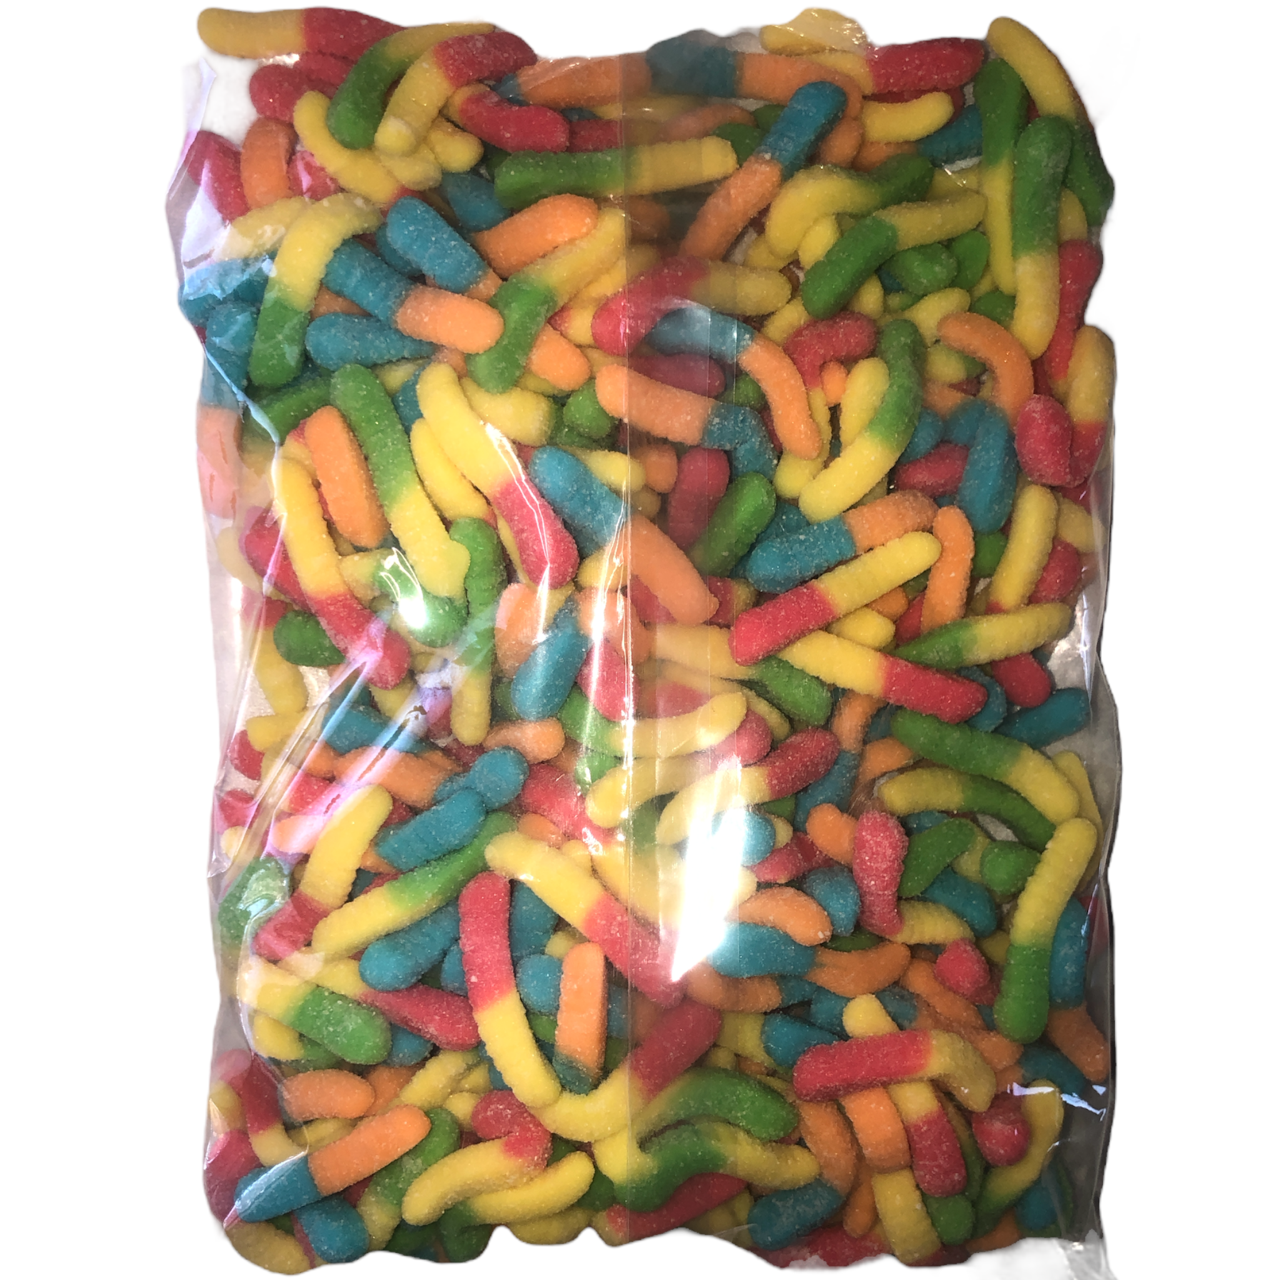 Neon Gummy Bears 5lb Candy 